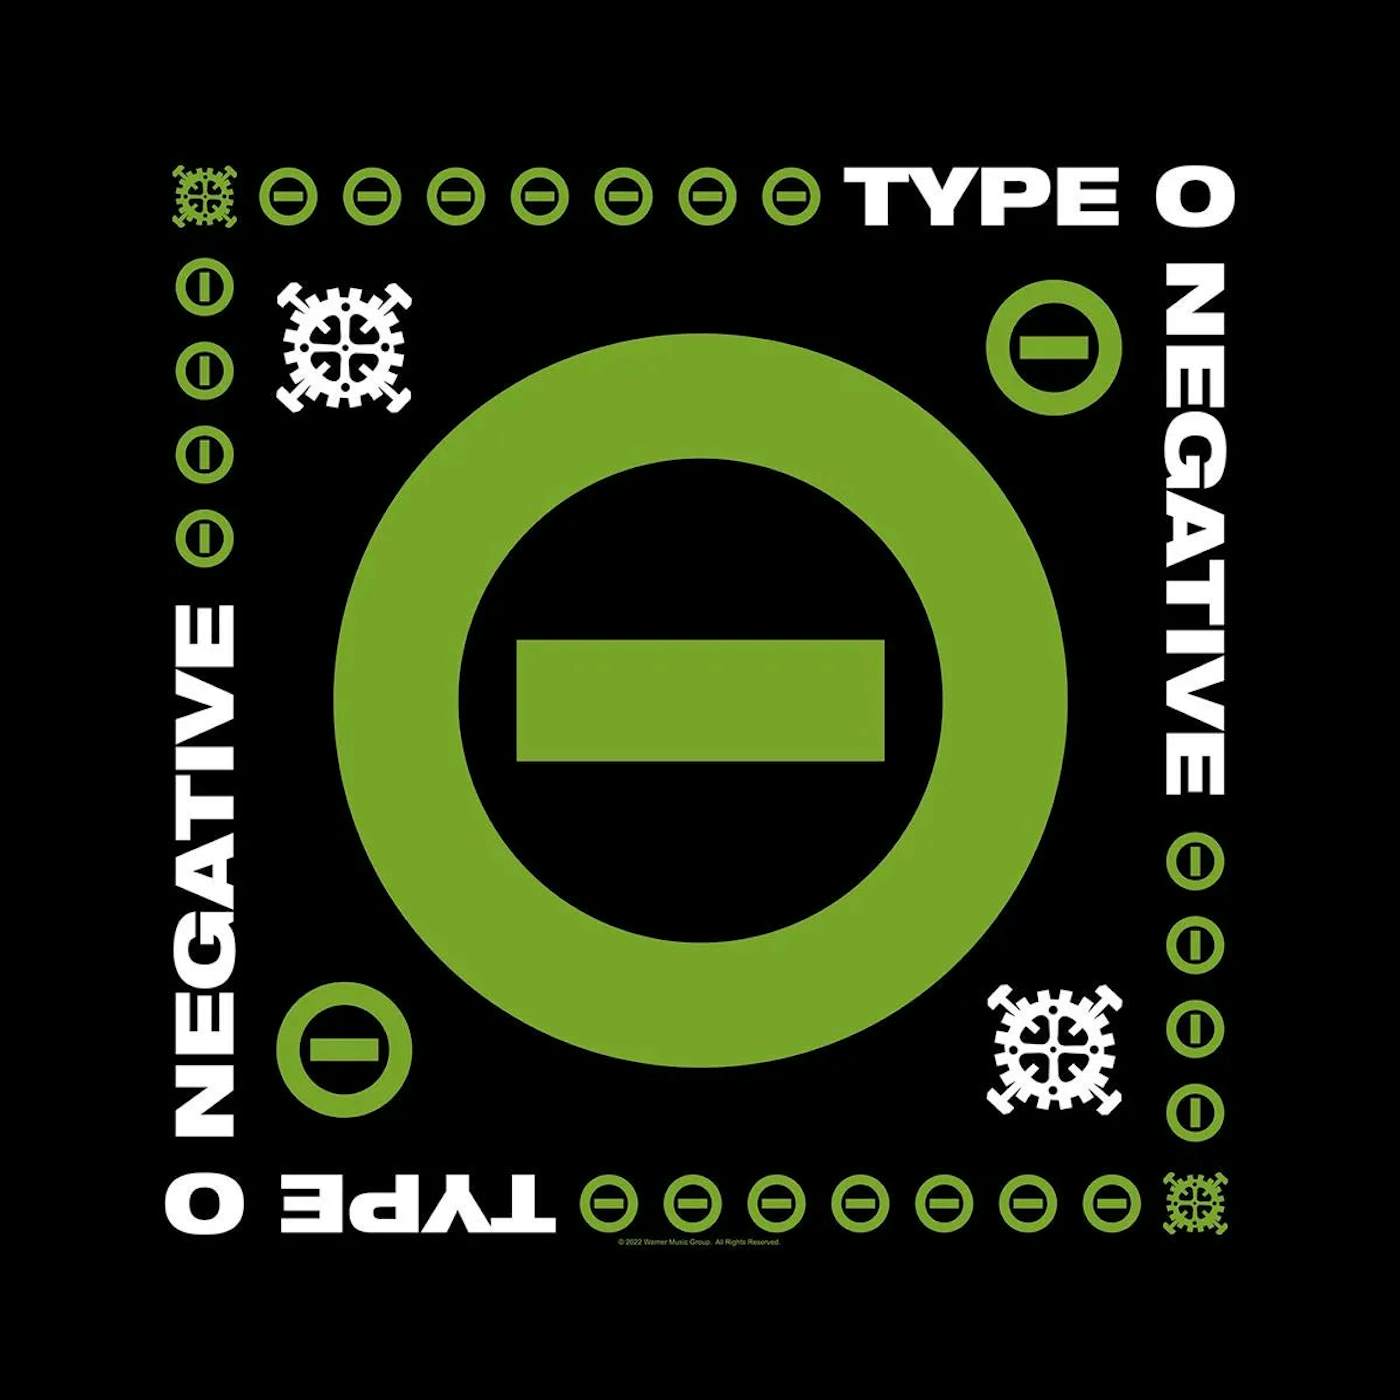  Type O Negative Bandana -  Negative Symbol